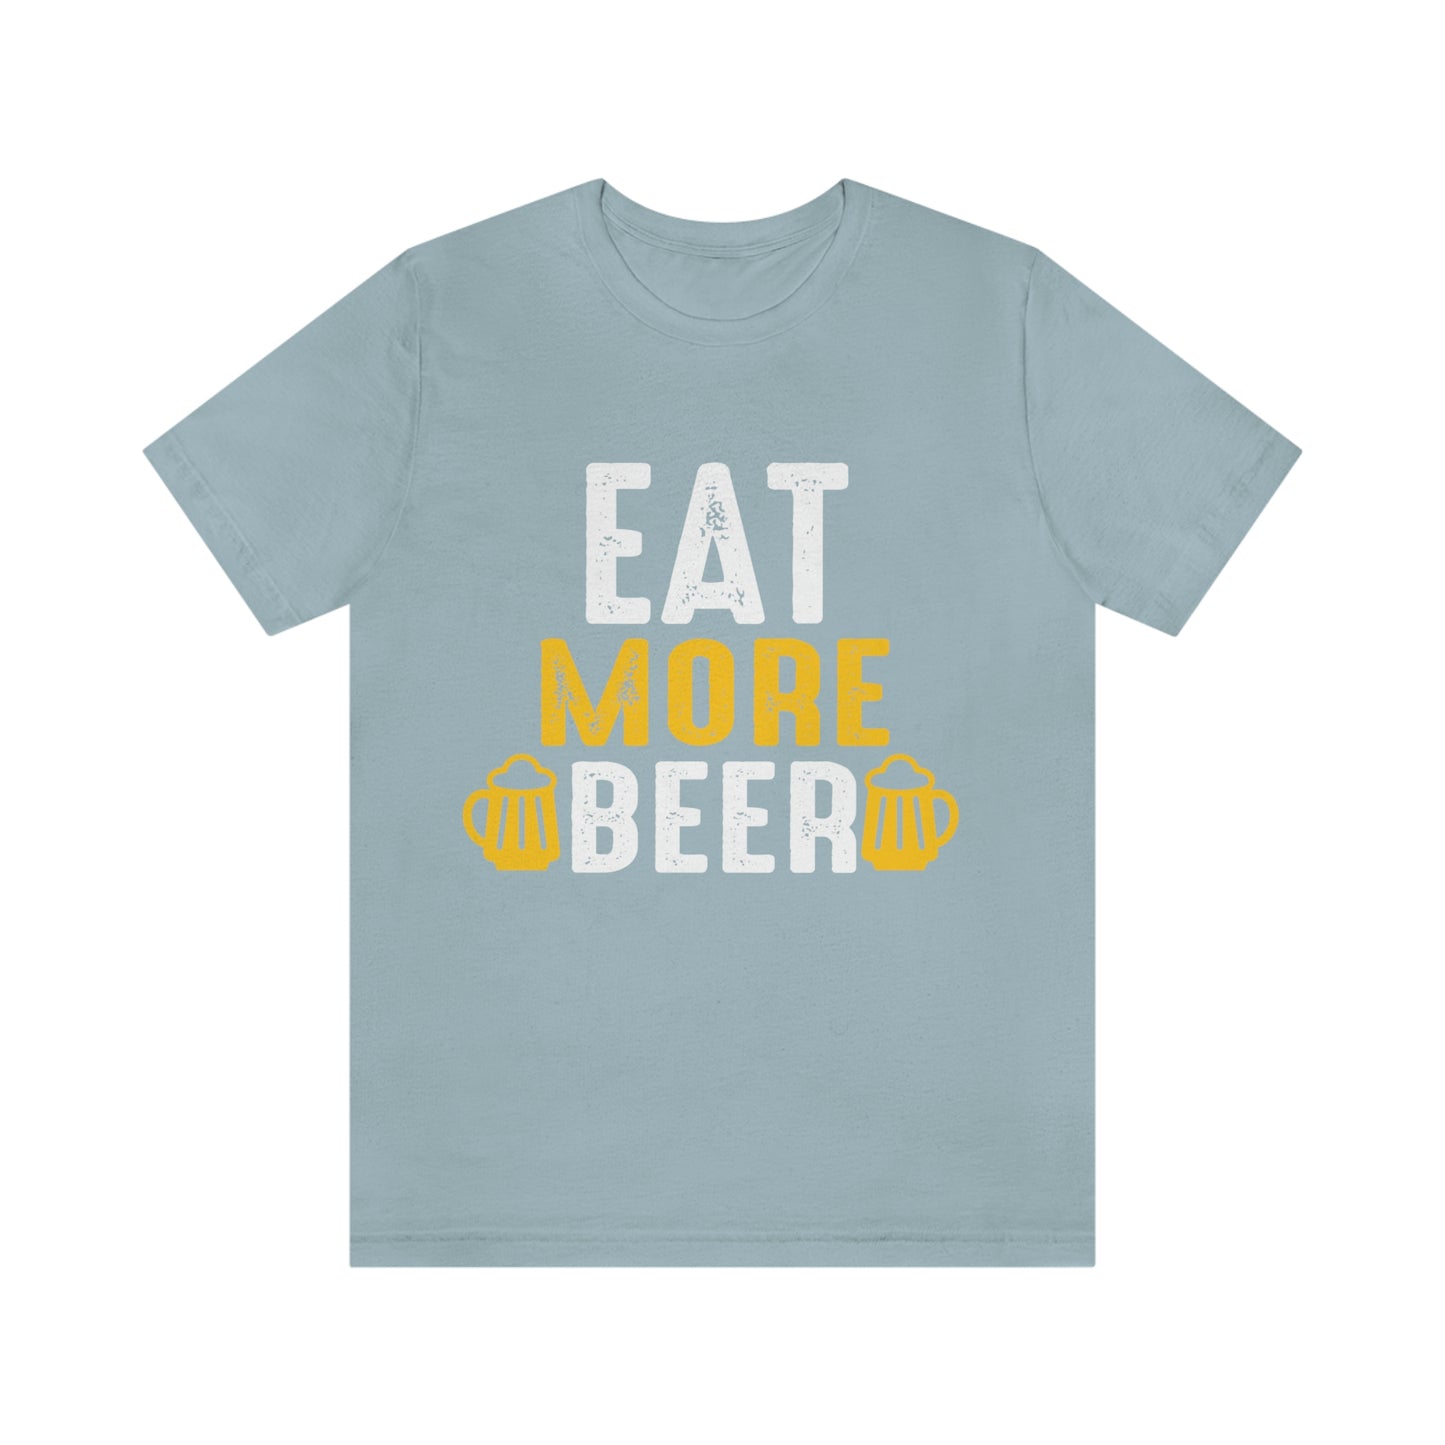 Eat More Beer - Unisex T-Shirt